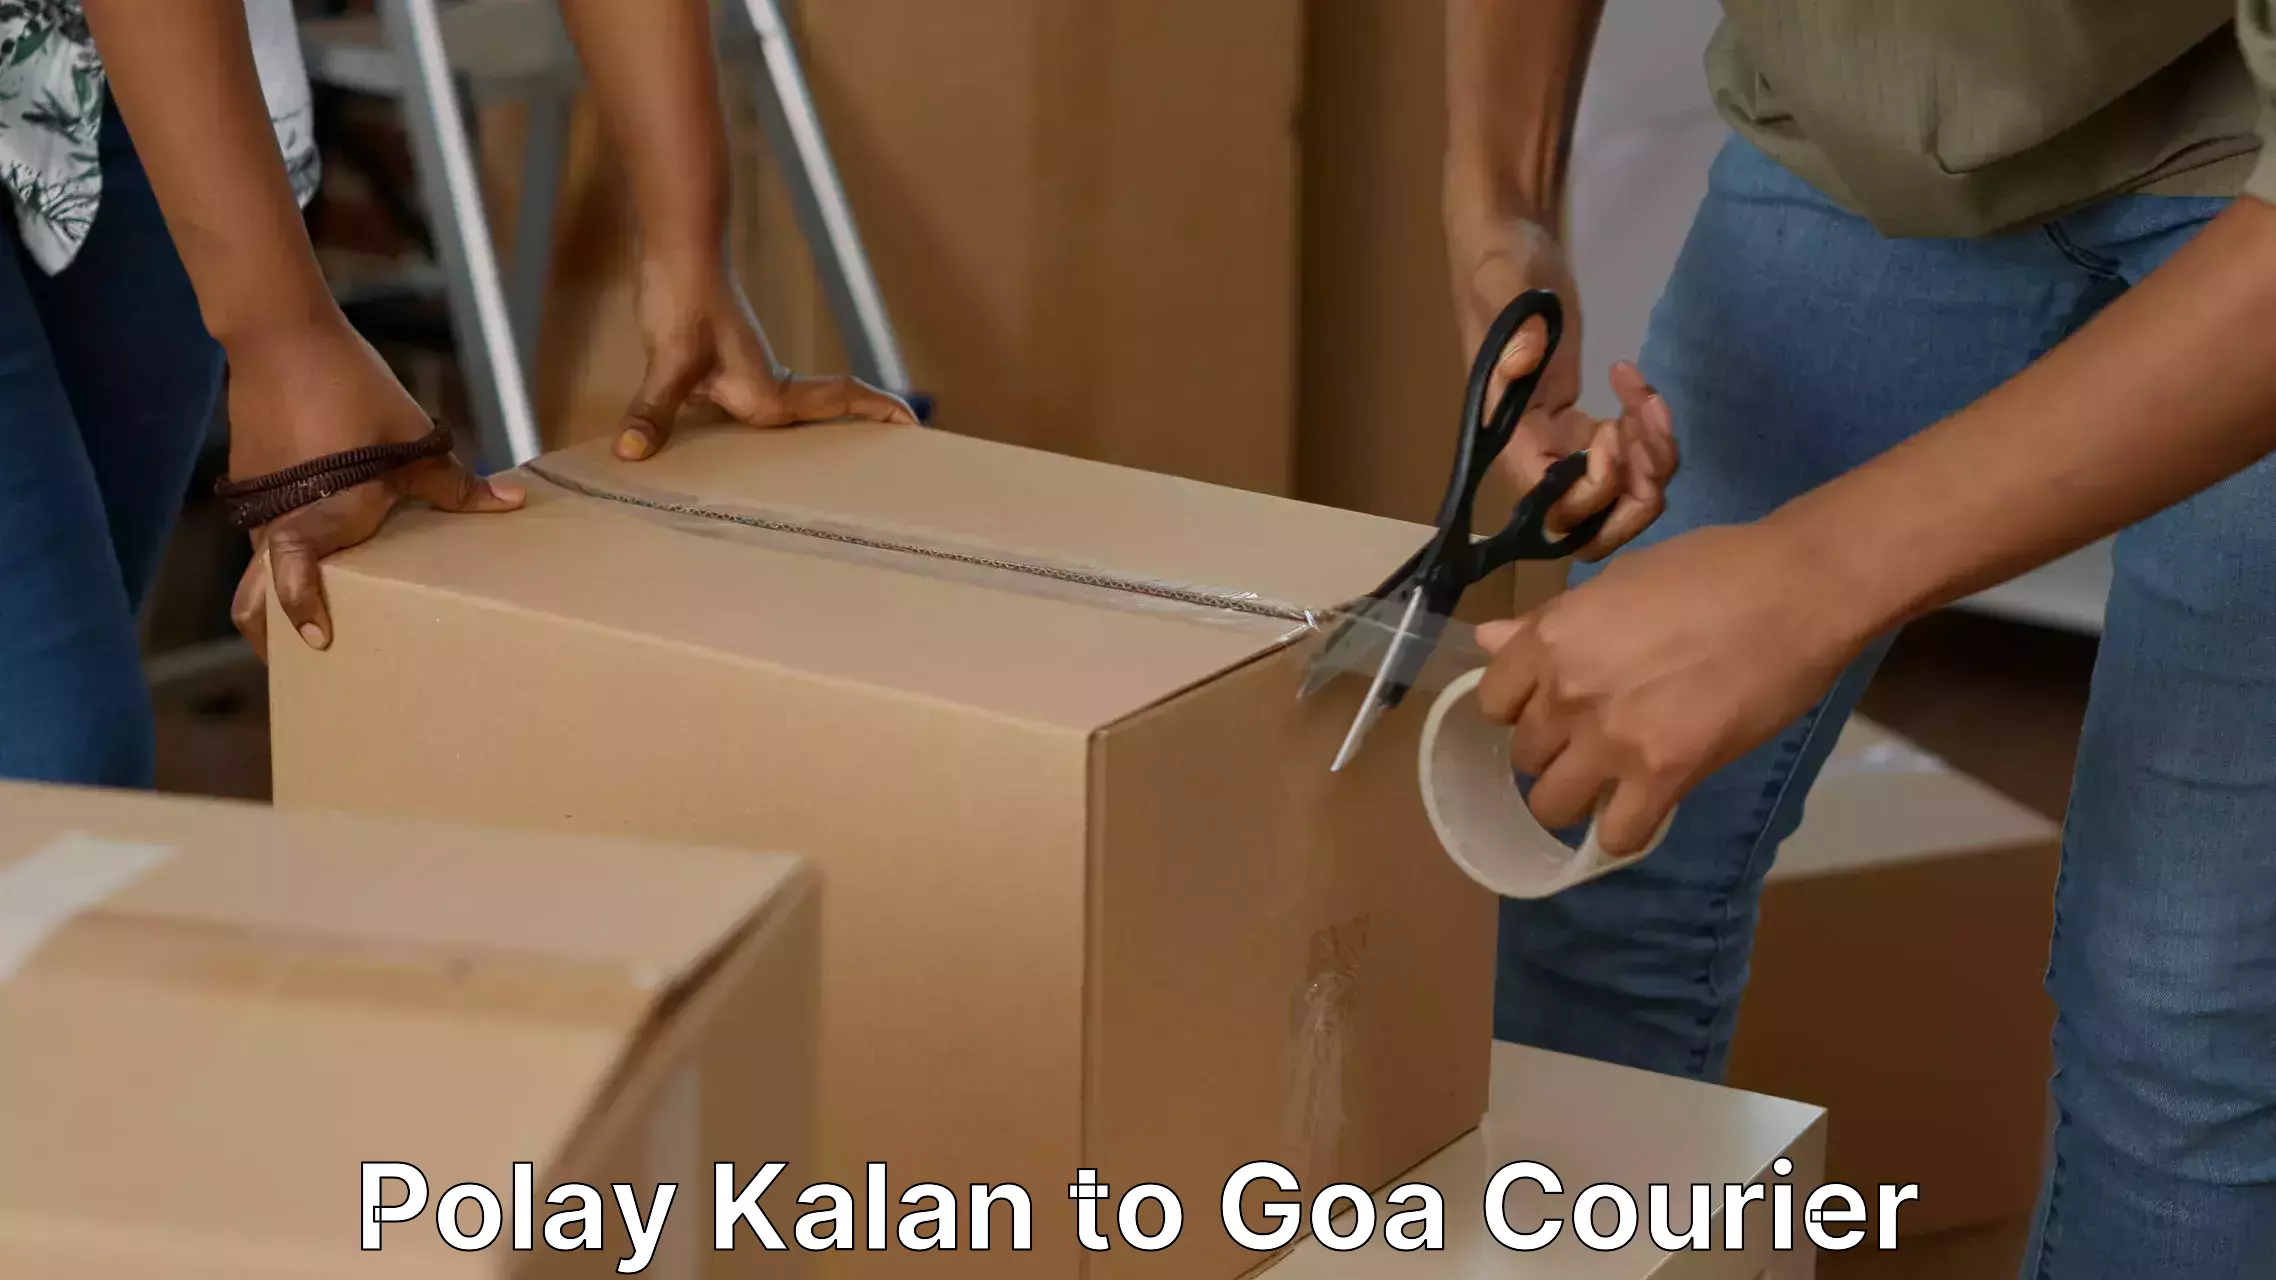 Affordable home movers Polay Kalan to South Goa